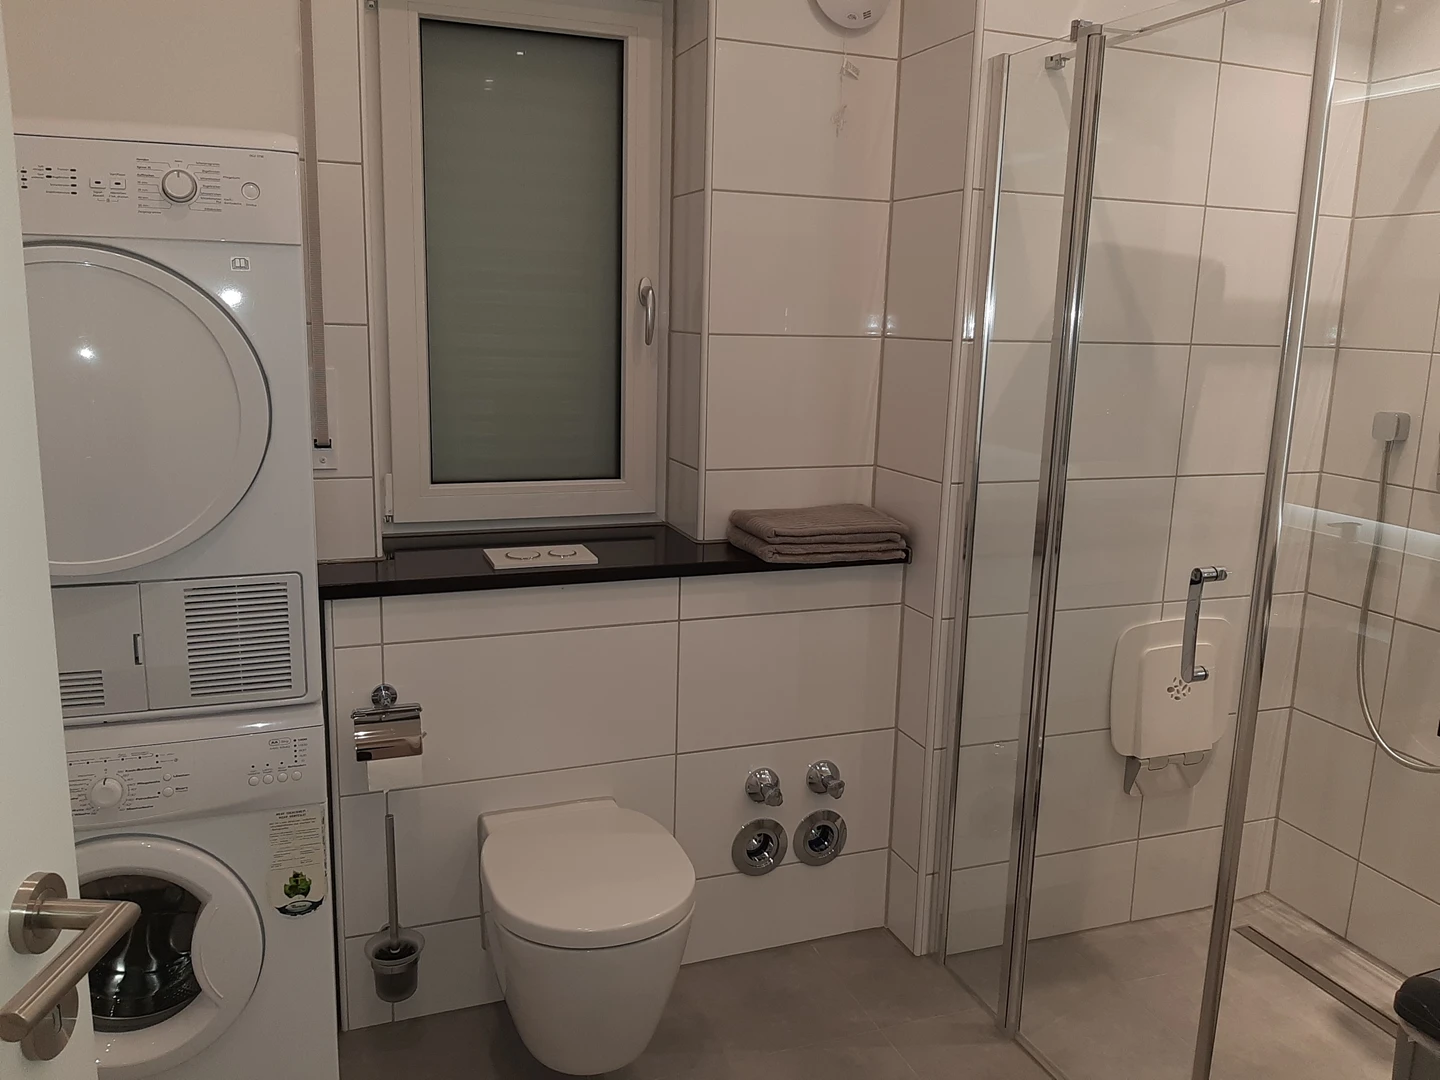 Cheap private room in Regensburg